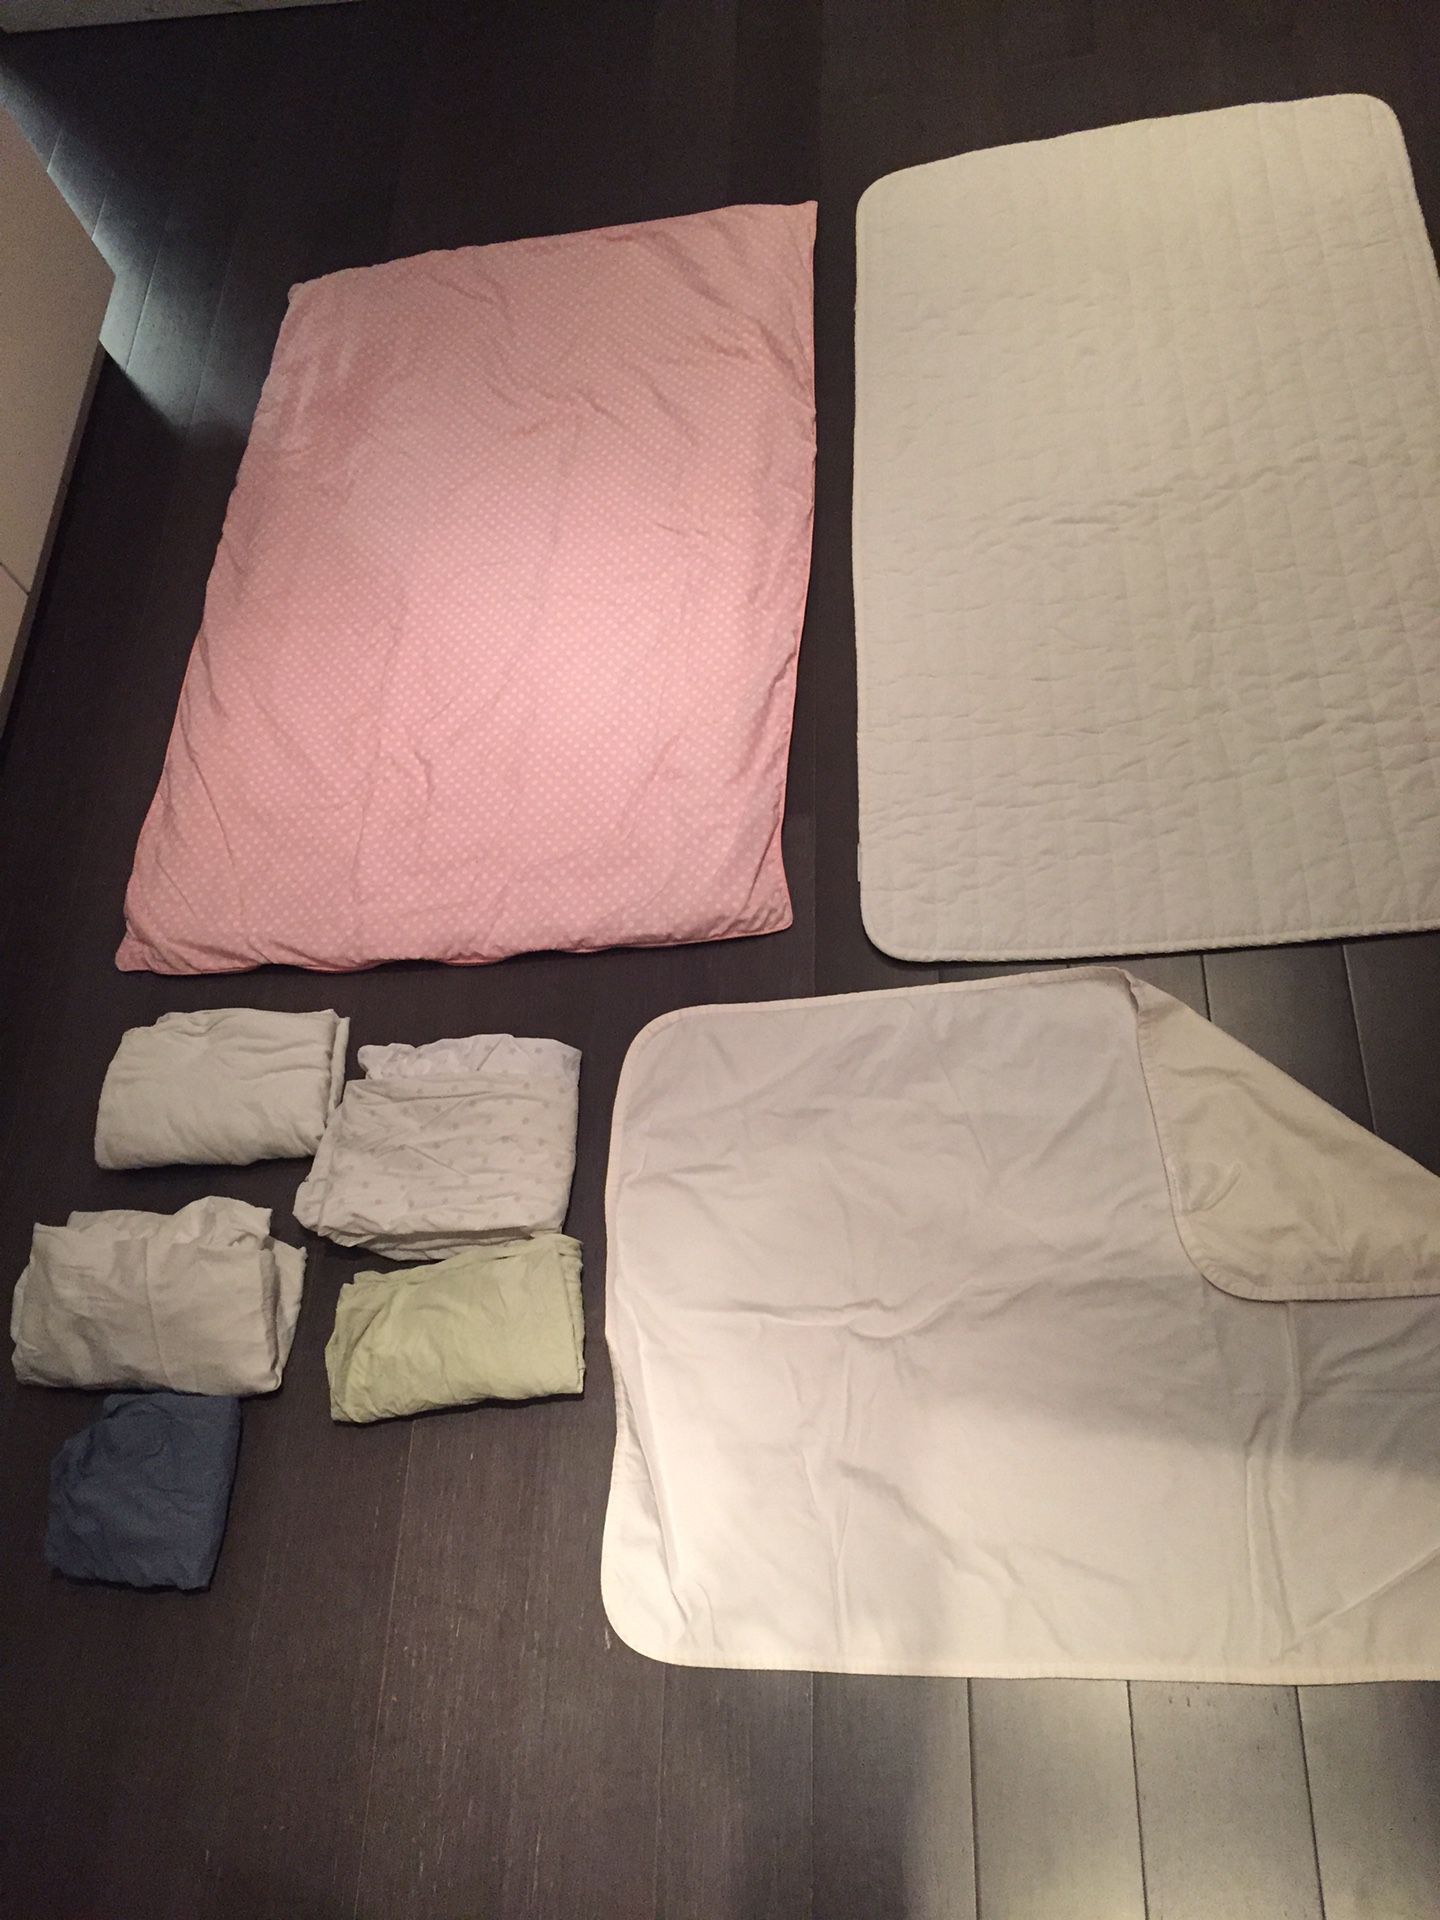 Full set of crib bedding